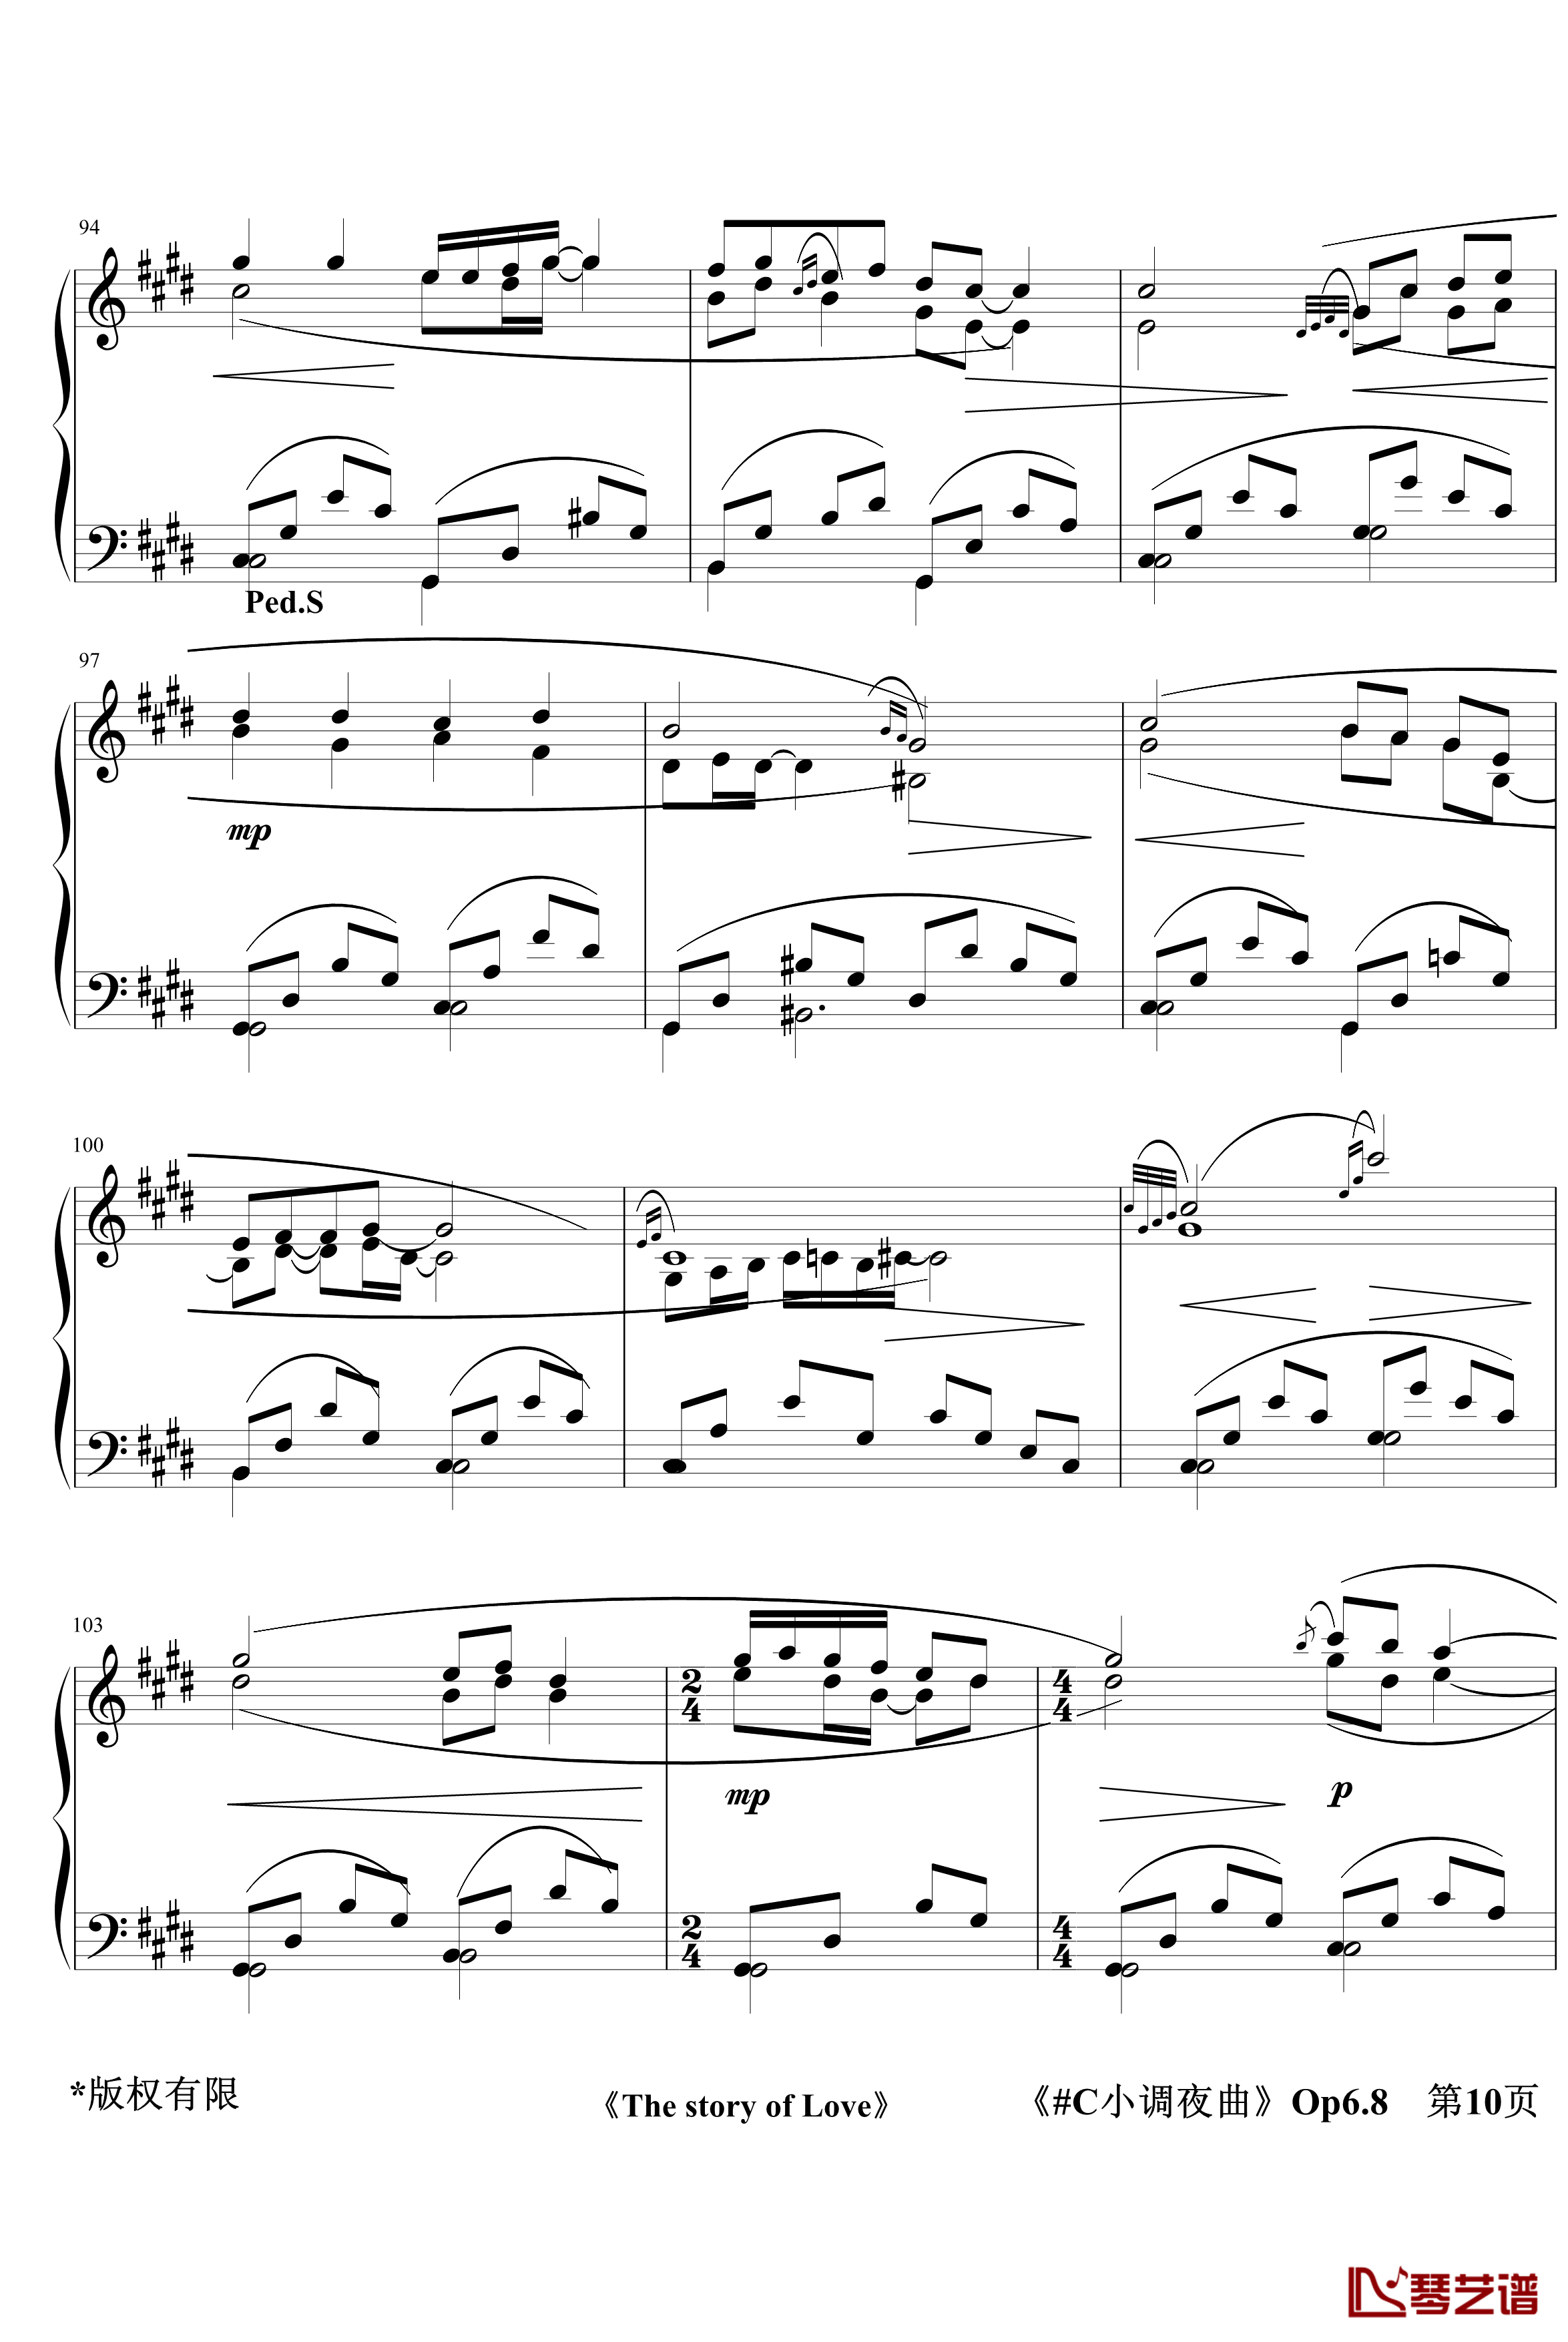 C小调夜曲Op6.8钢琴谱-jerry574310